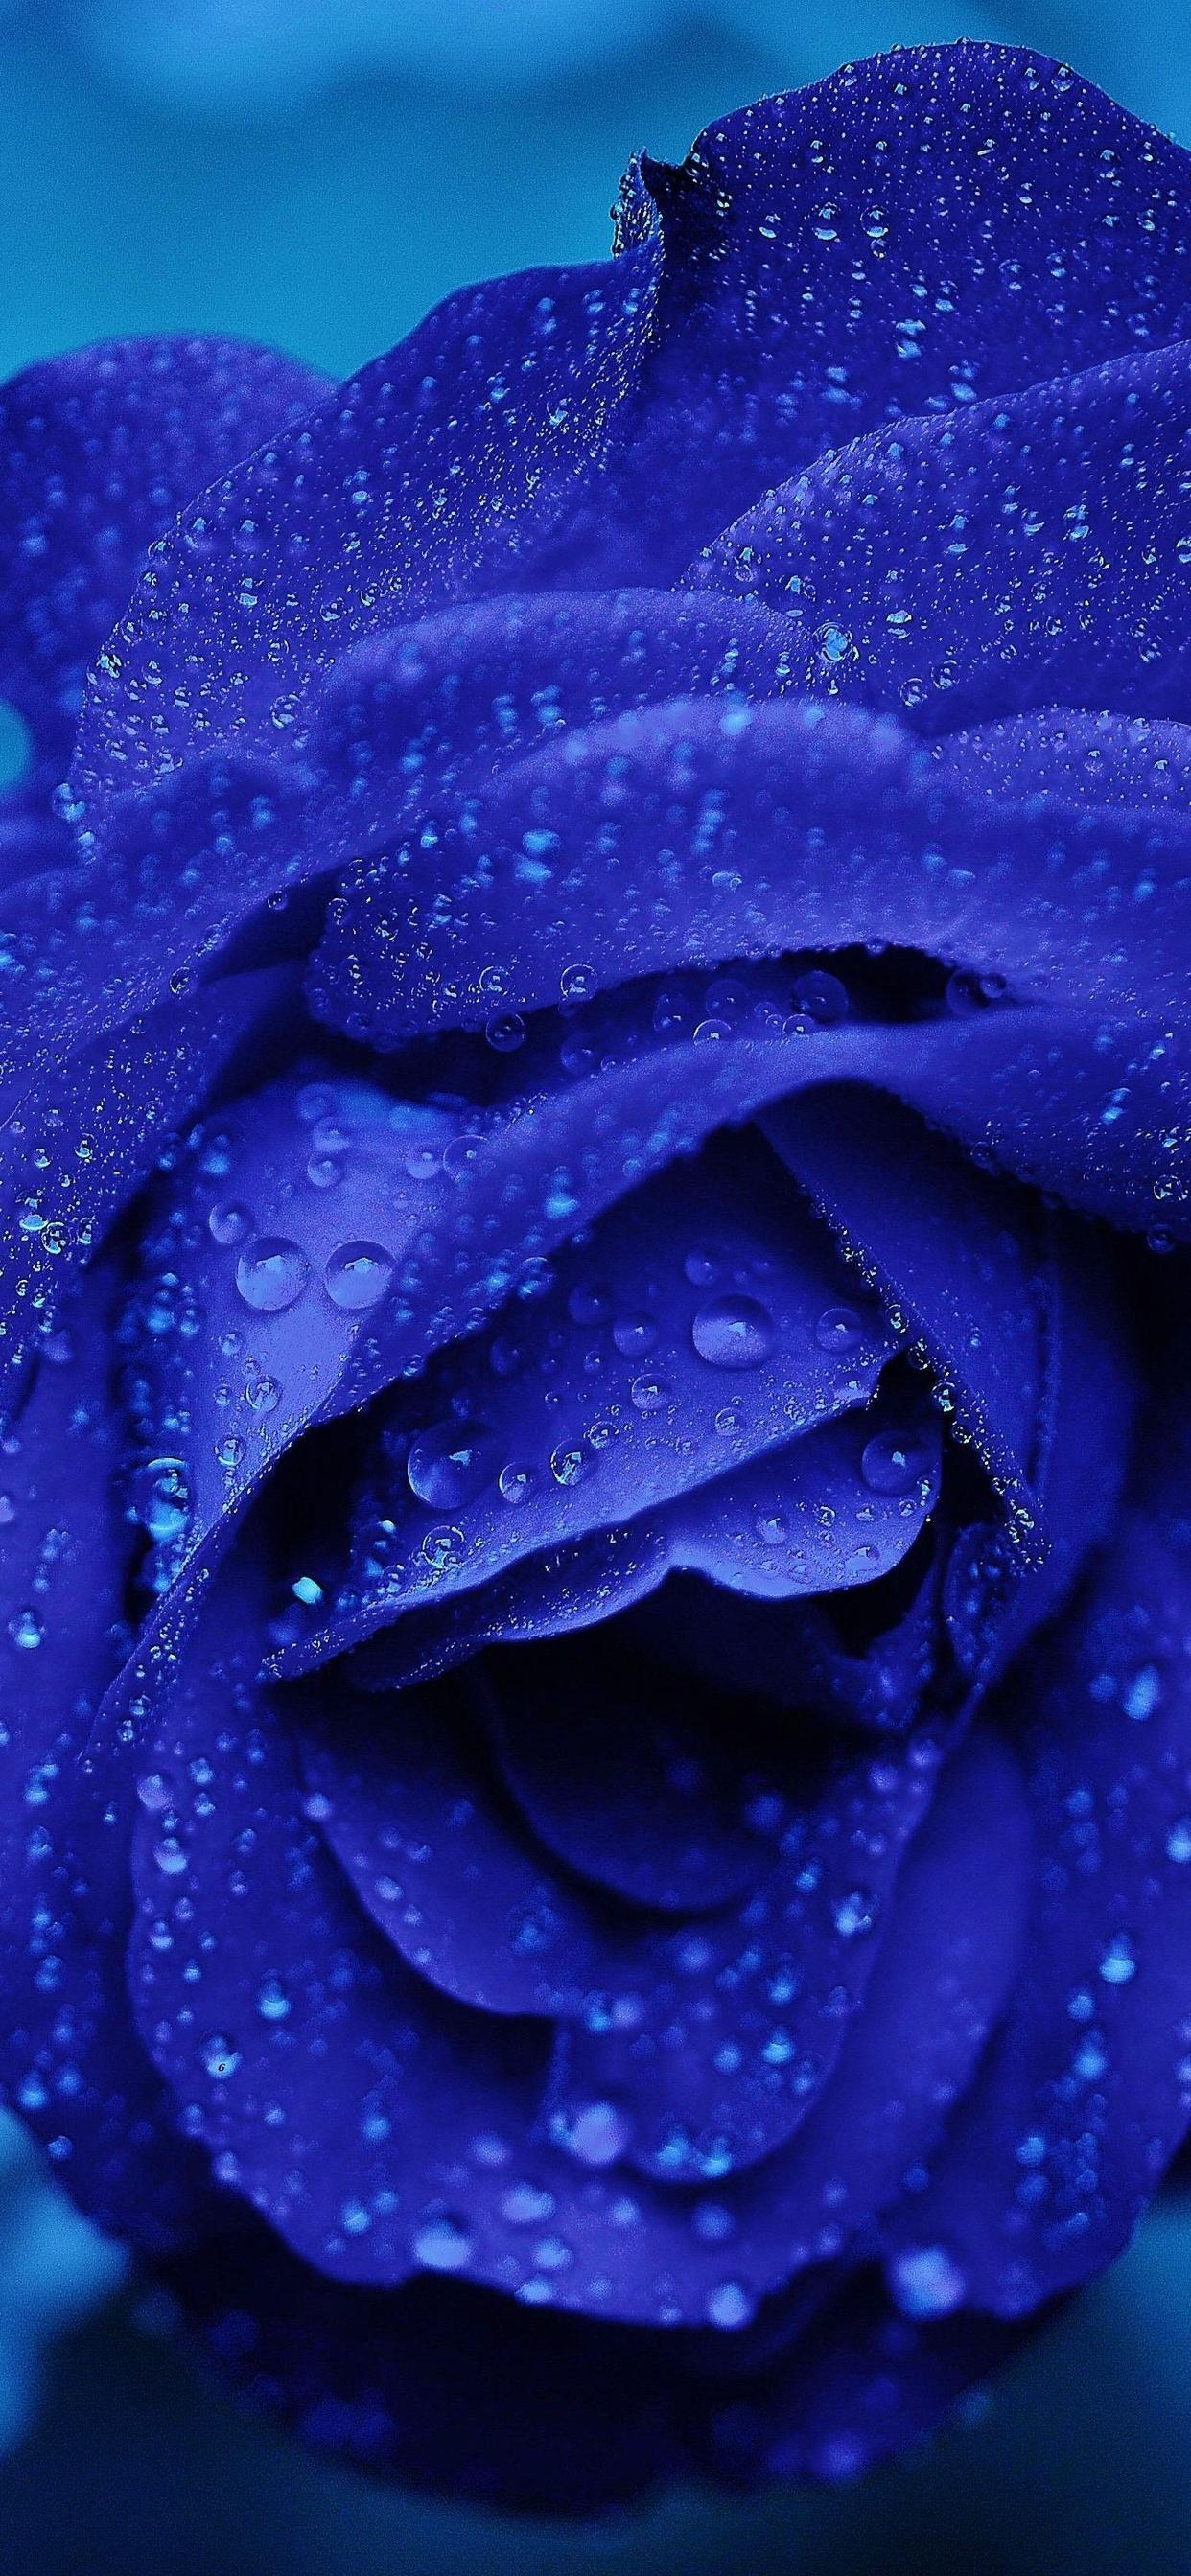 Blue Flower 4k 5k iPhone Xs Max HD Wallpaper Image